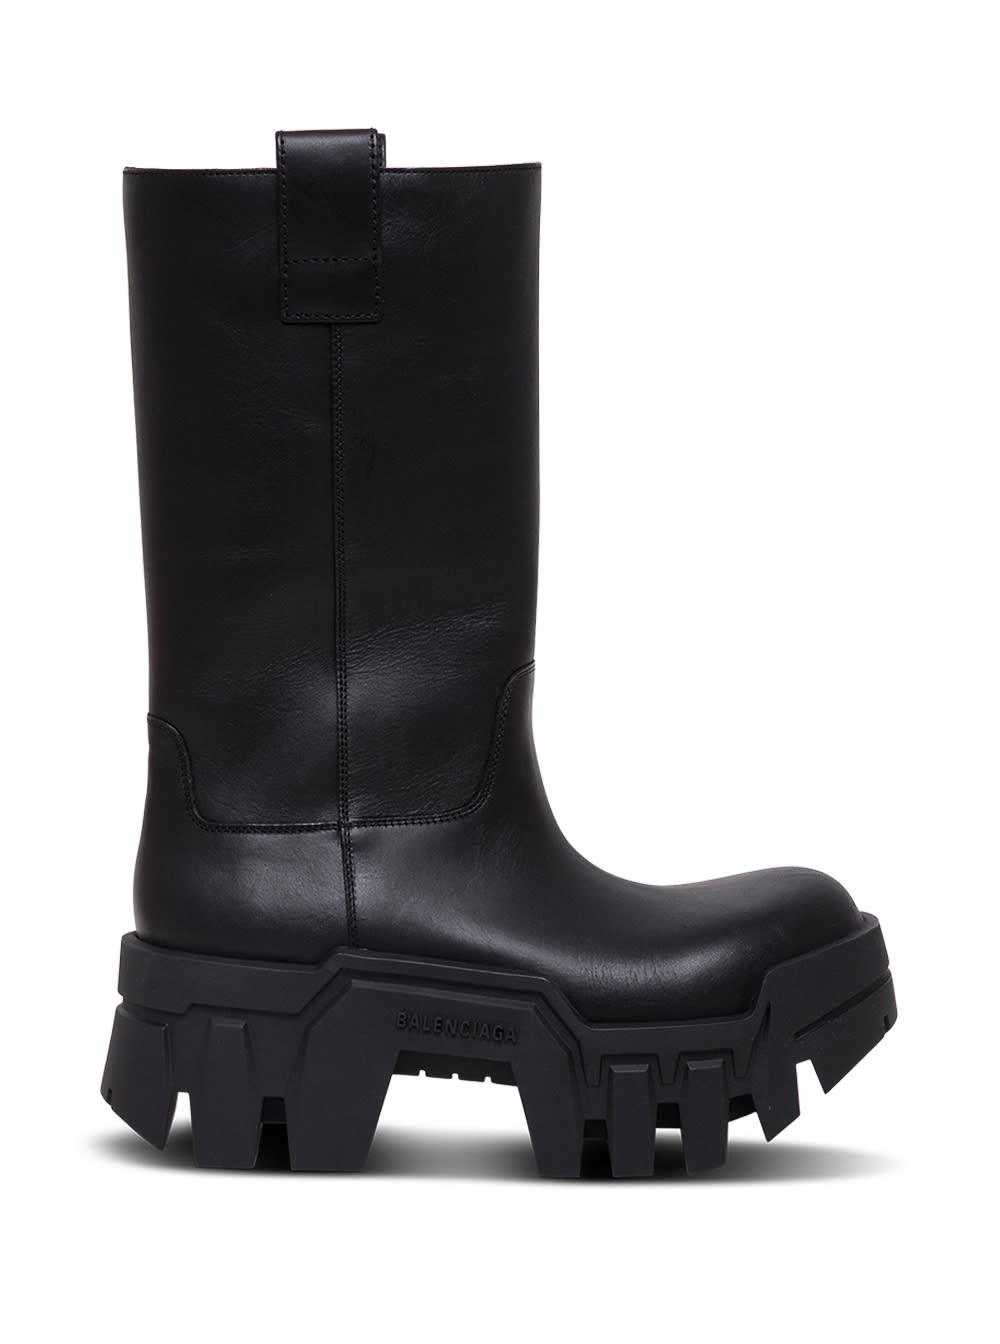 Balenciaga Bulldozer Black Leather Boots With Treaded Sole